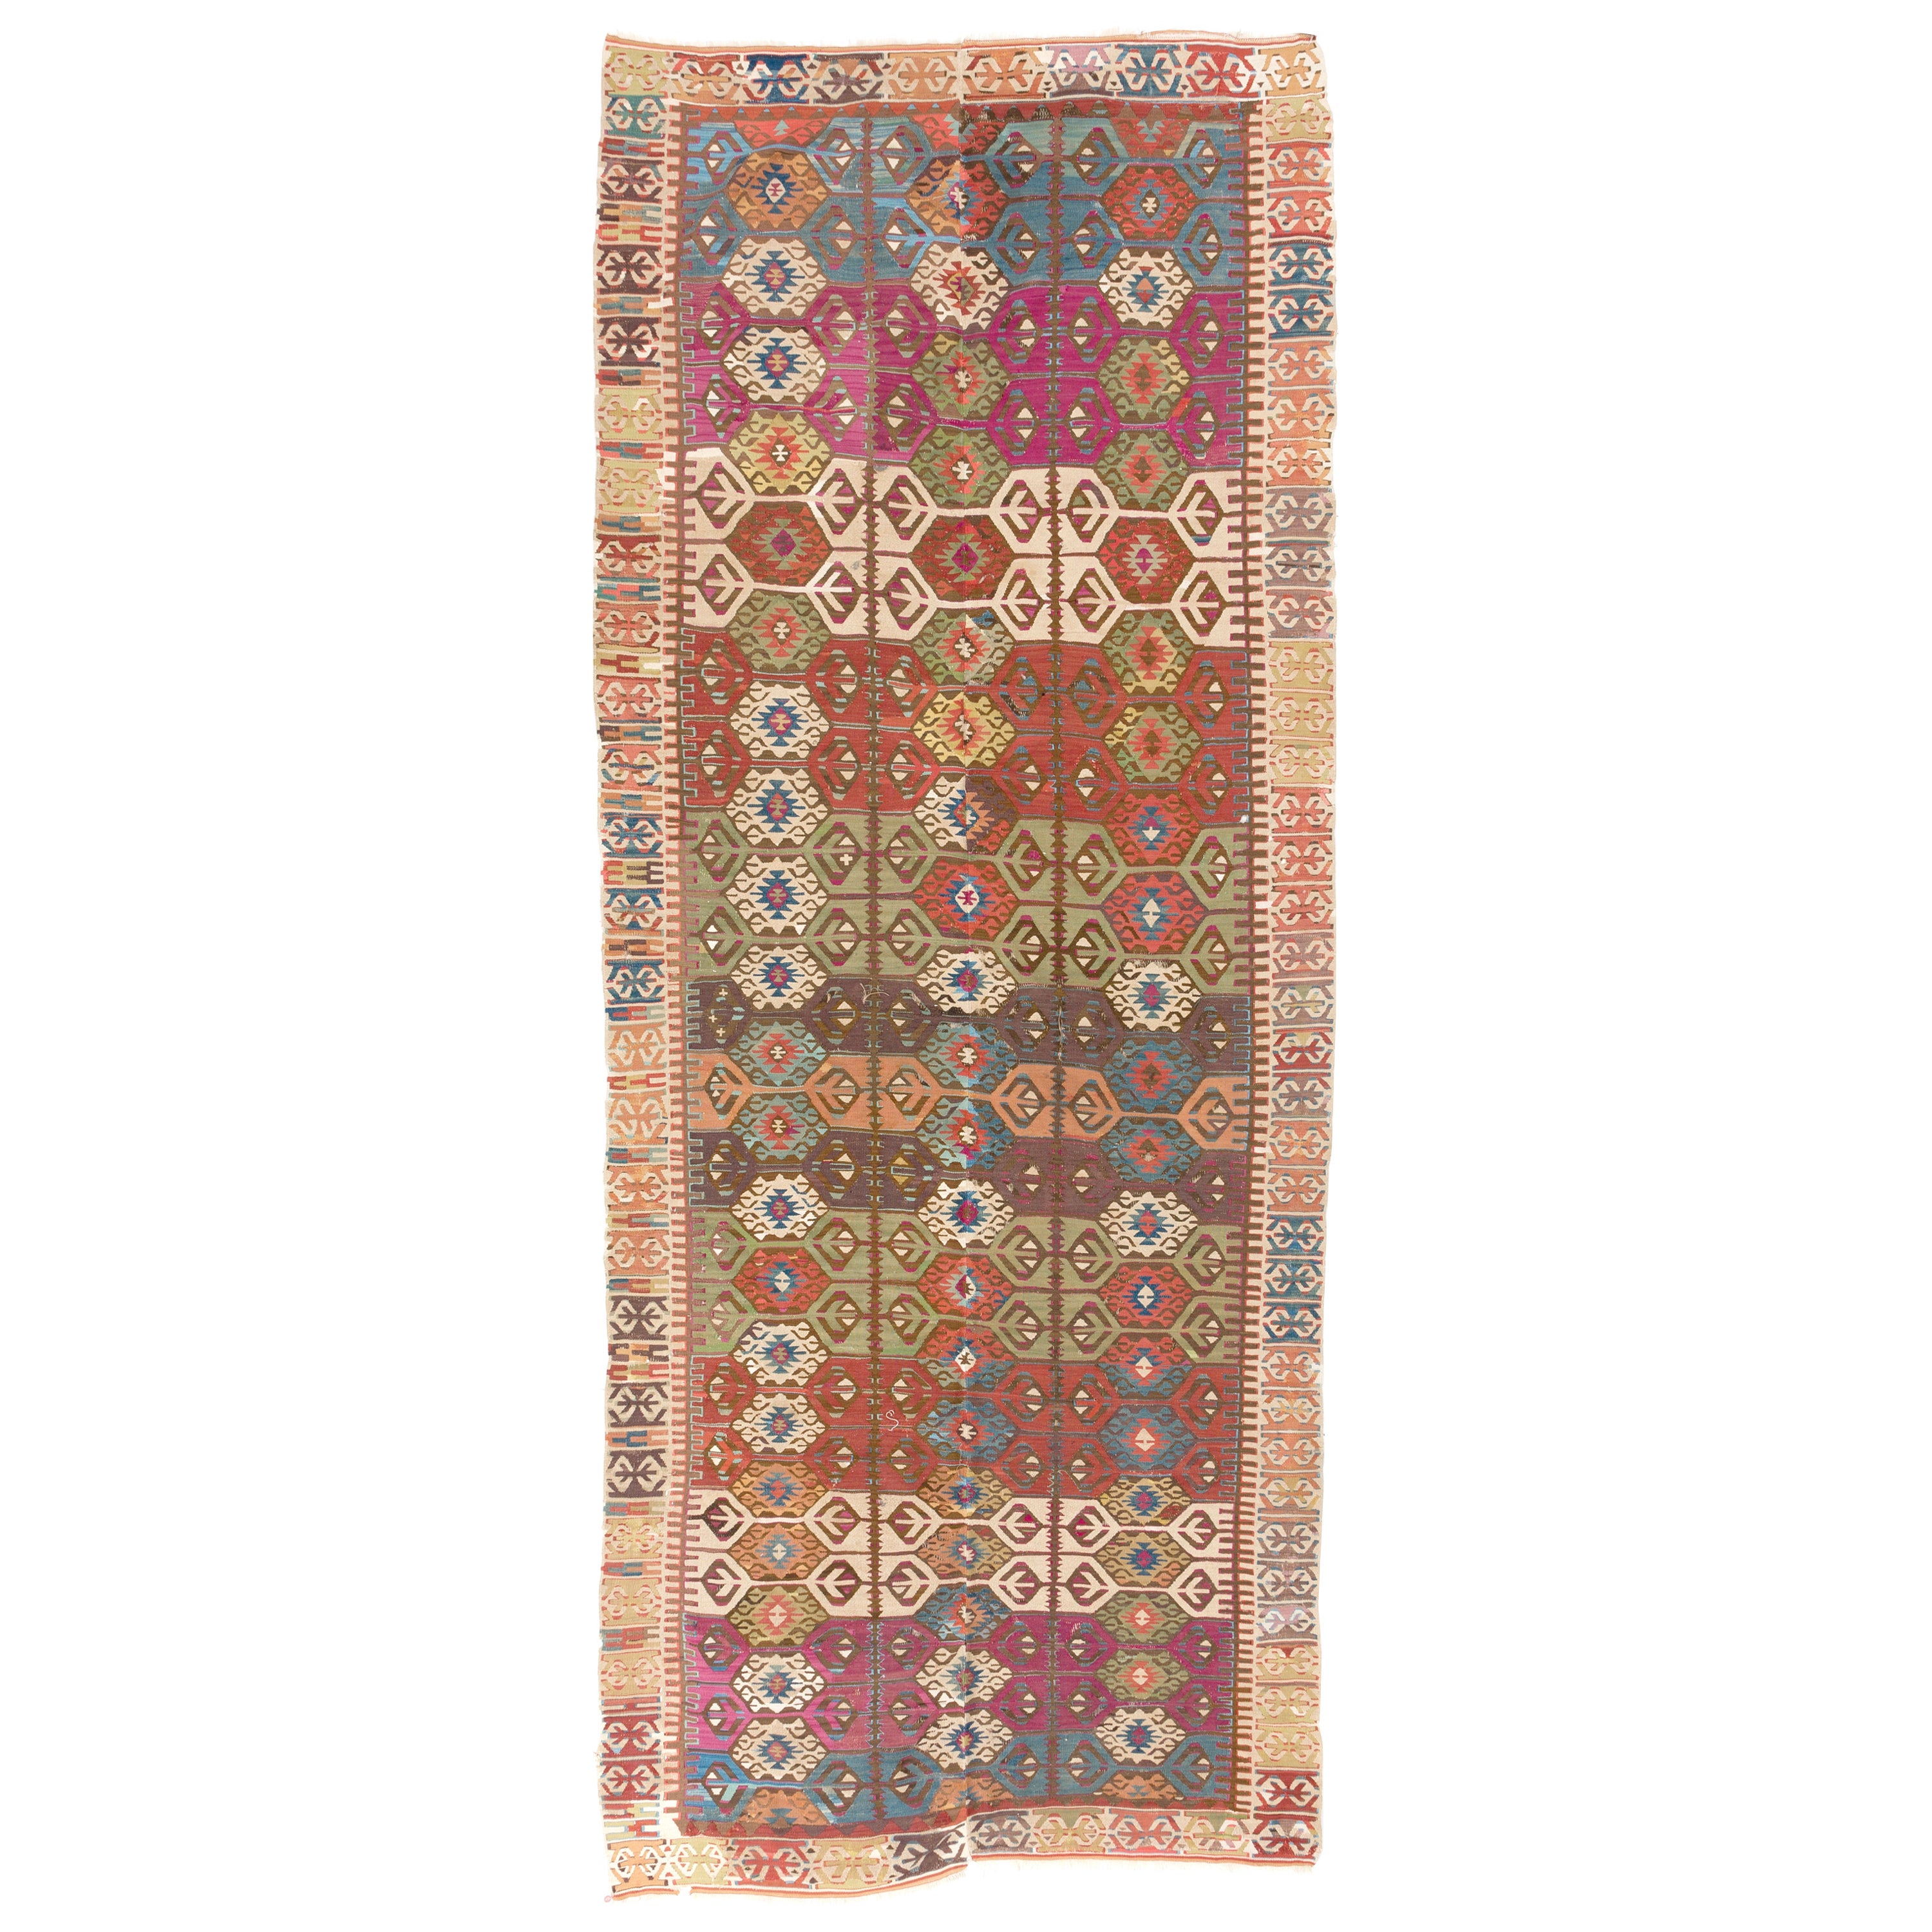 4.8x12.2 ft Antique Turkish Konya Kilim Rug, Flat-Weave Floor Covering, Ca 1890 For Sale